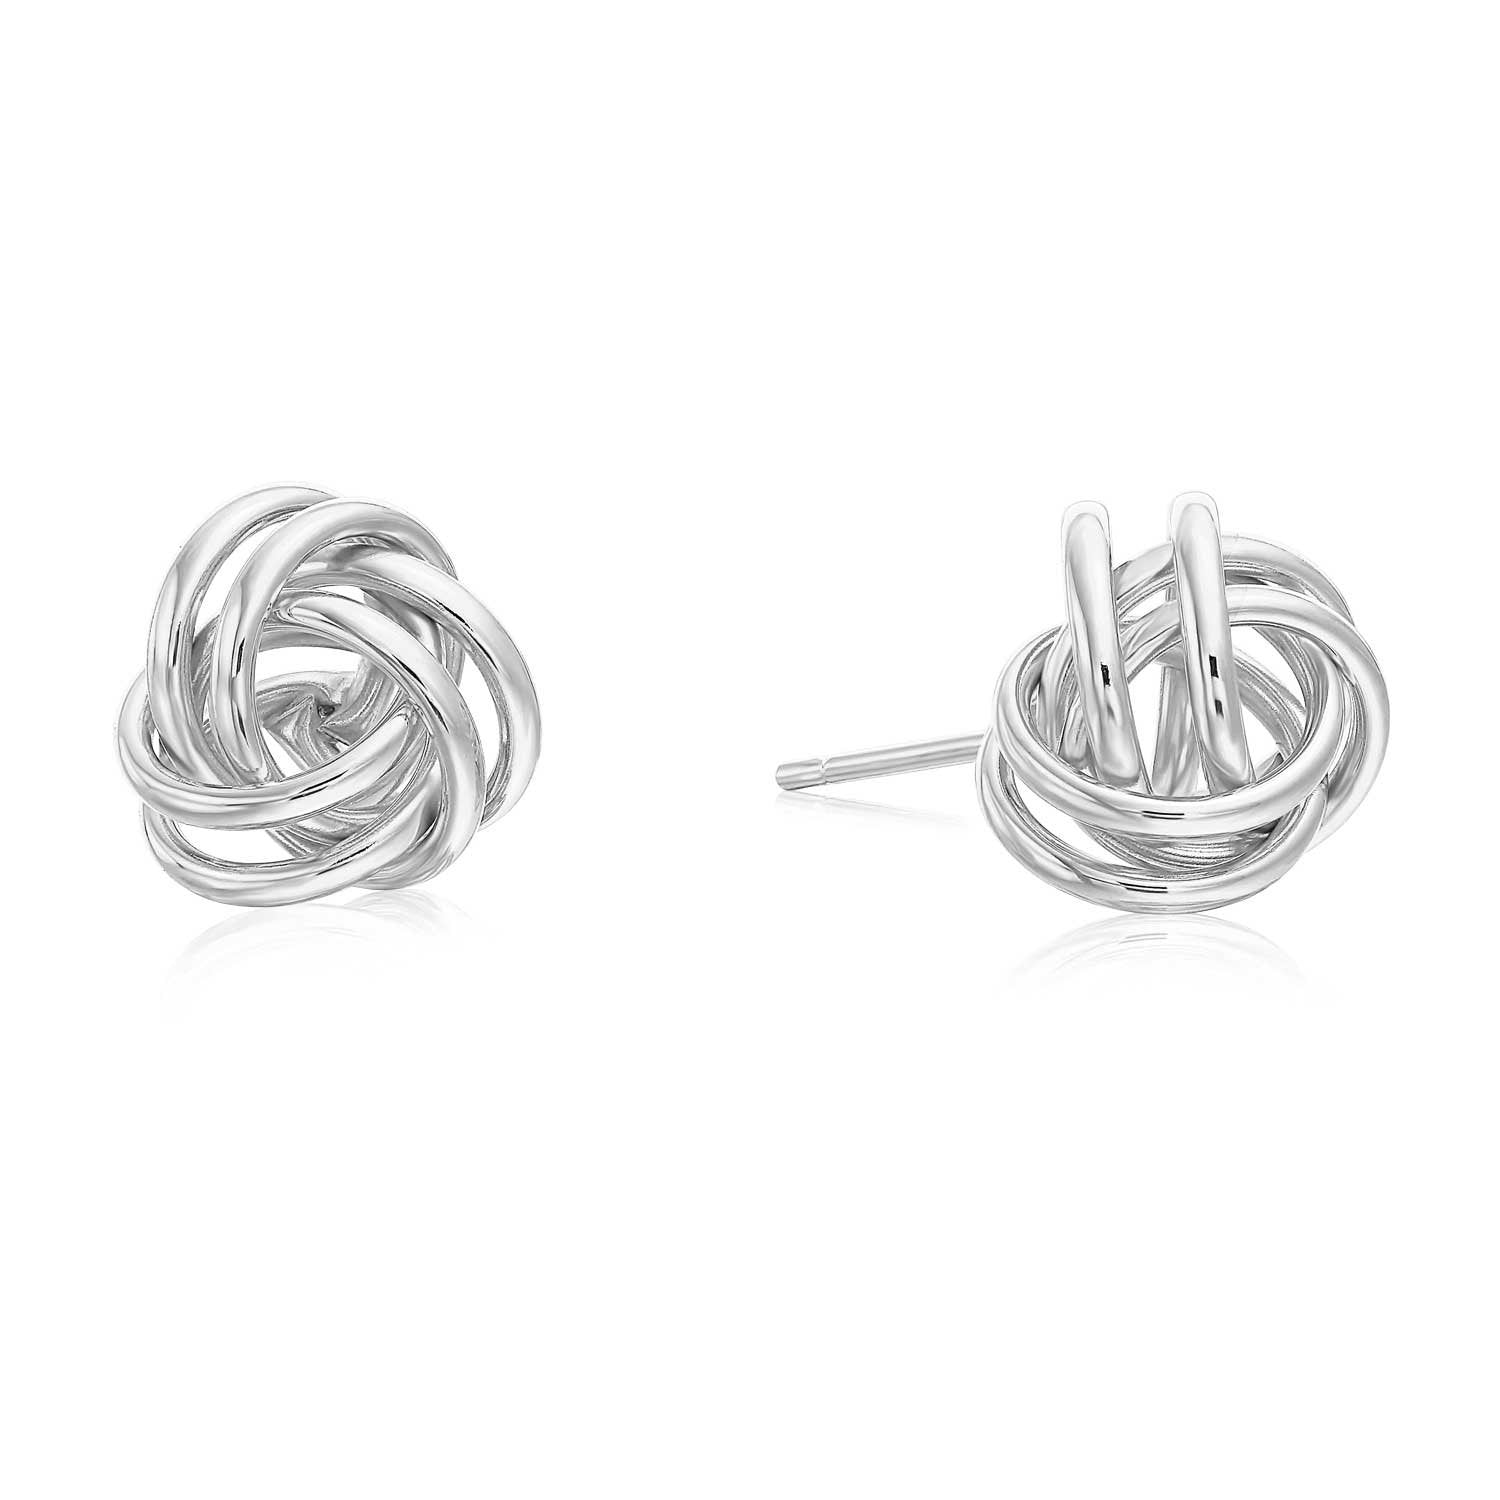 Earring Backs, Silver Extra Large Earring Backs Sterling Adjustable Earring  Backs for Heavy Earrings Support (9mm,3 Pairs)